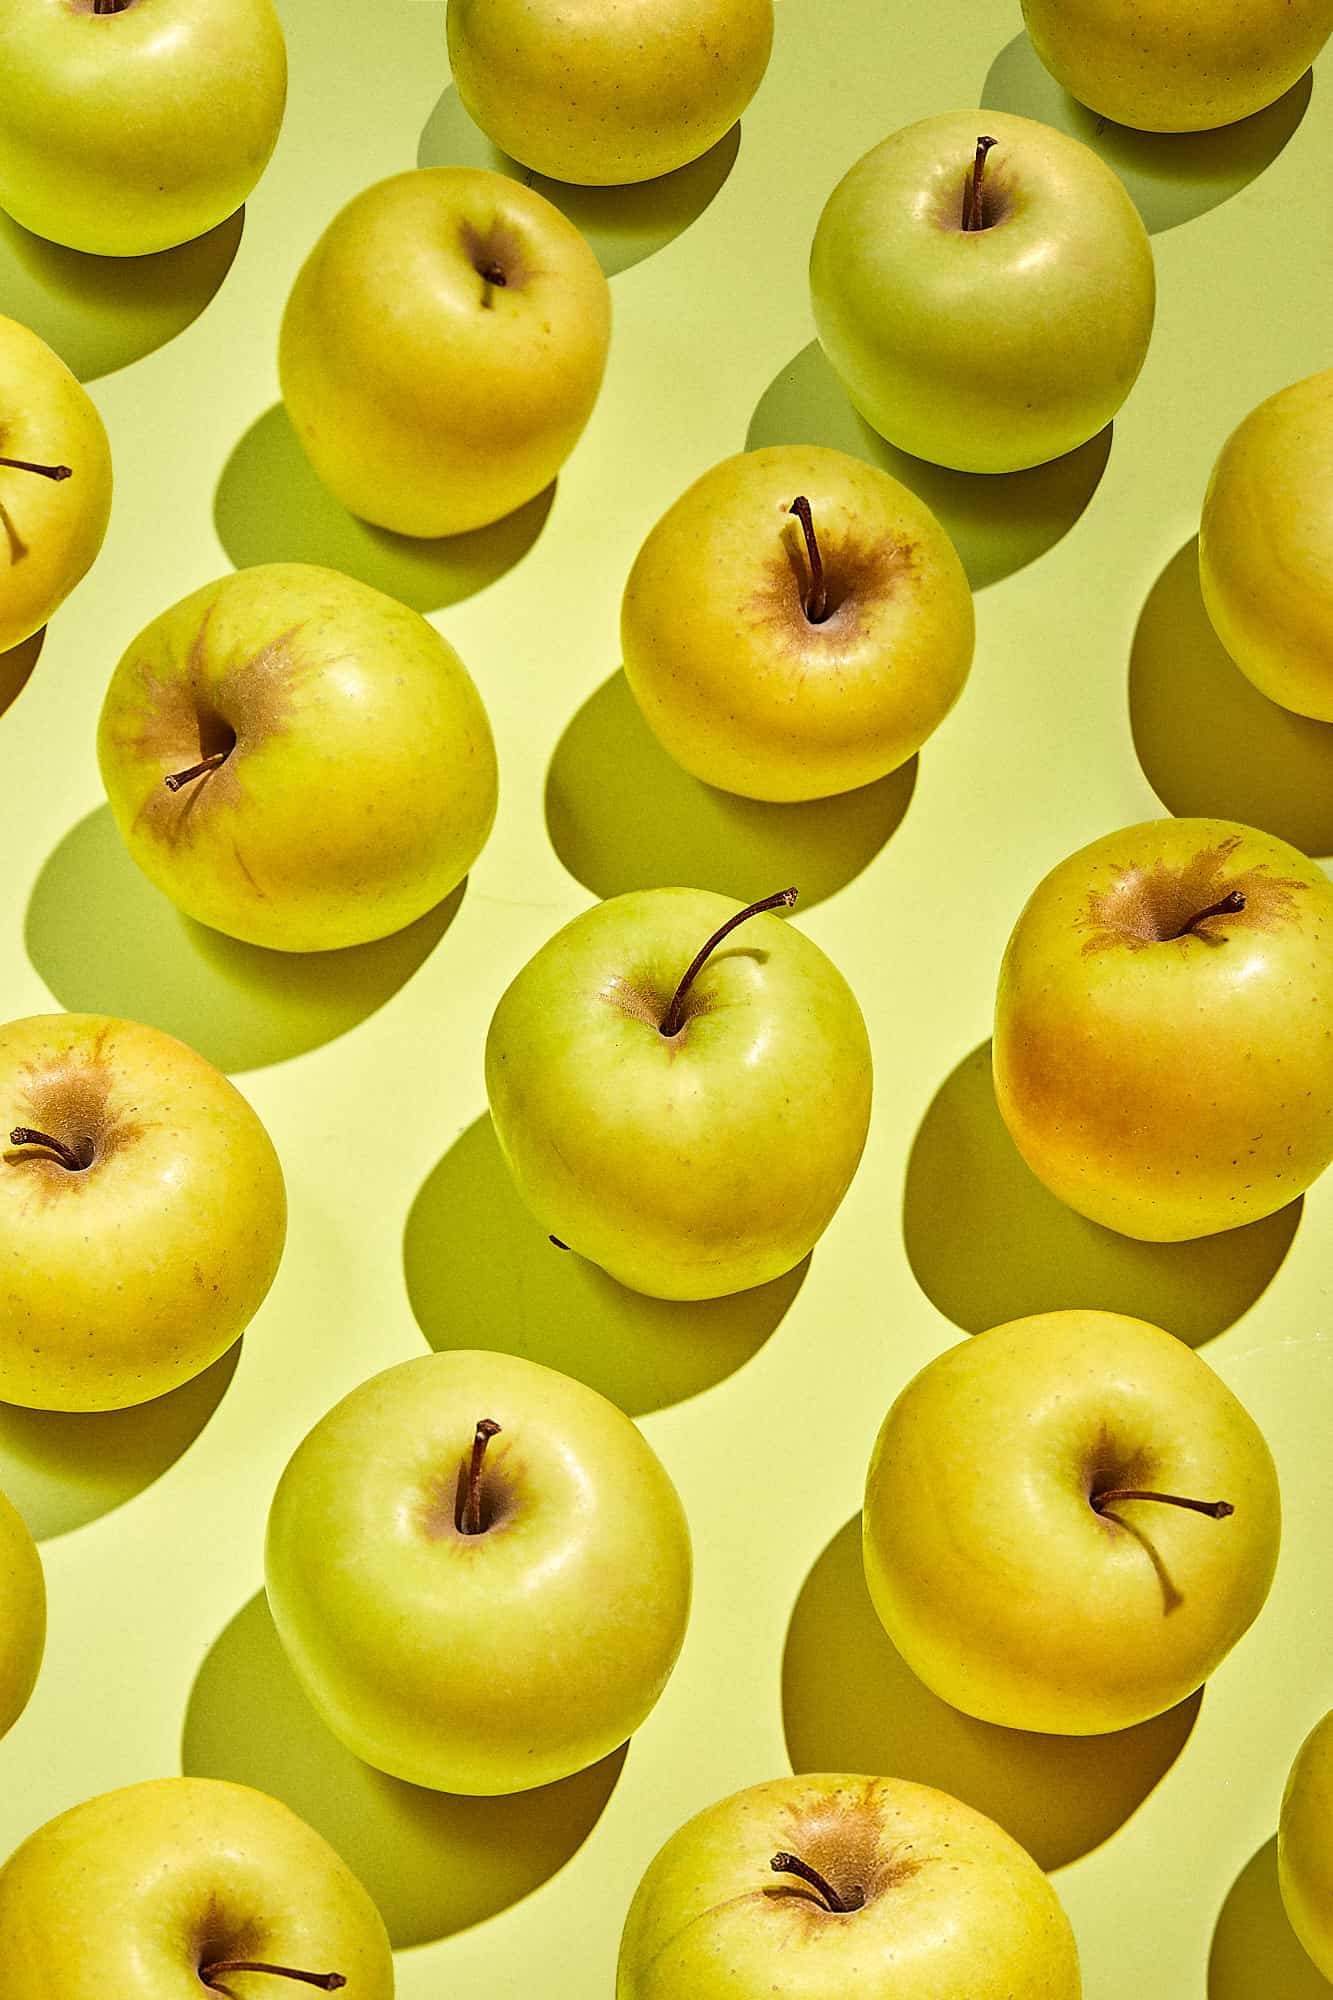 Golden Delicious Apples